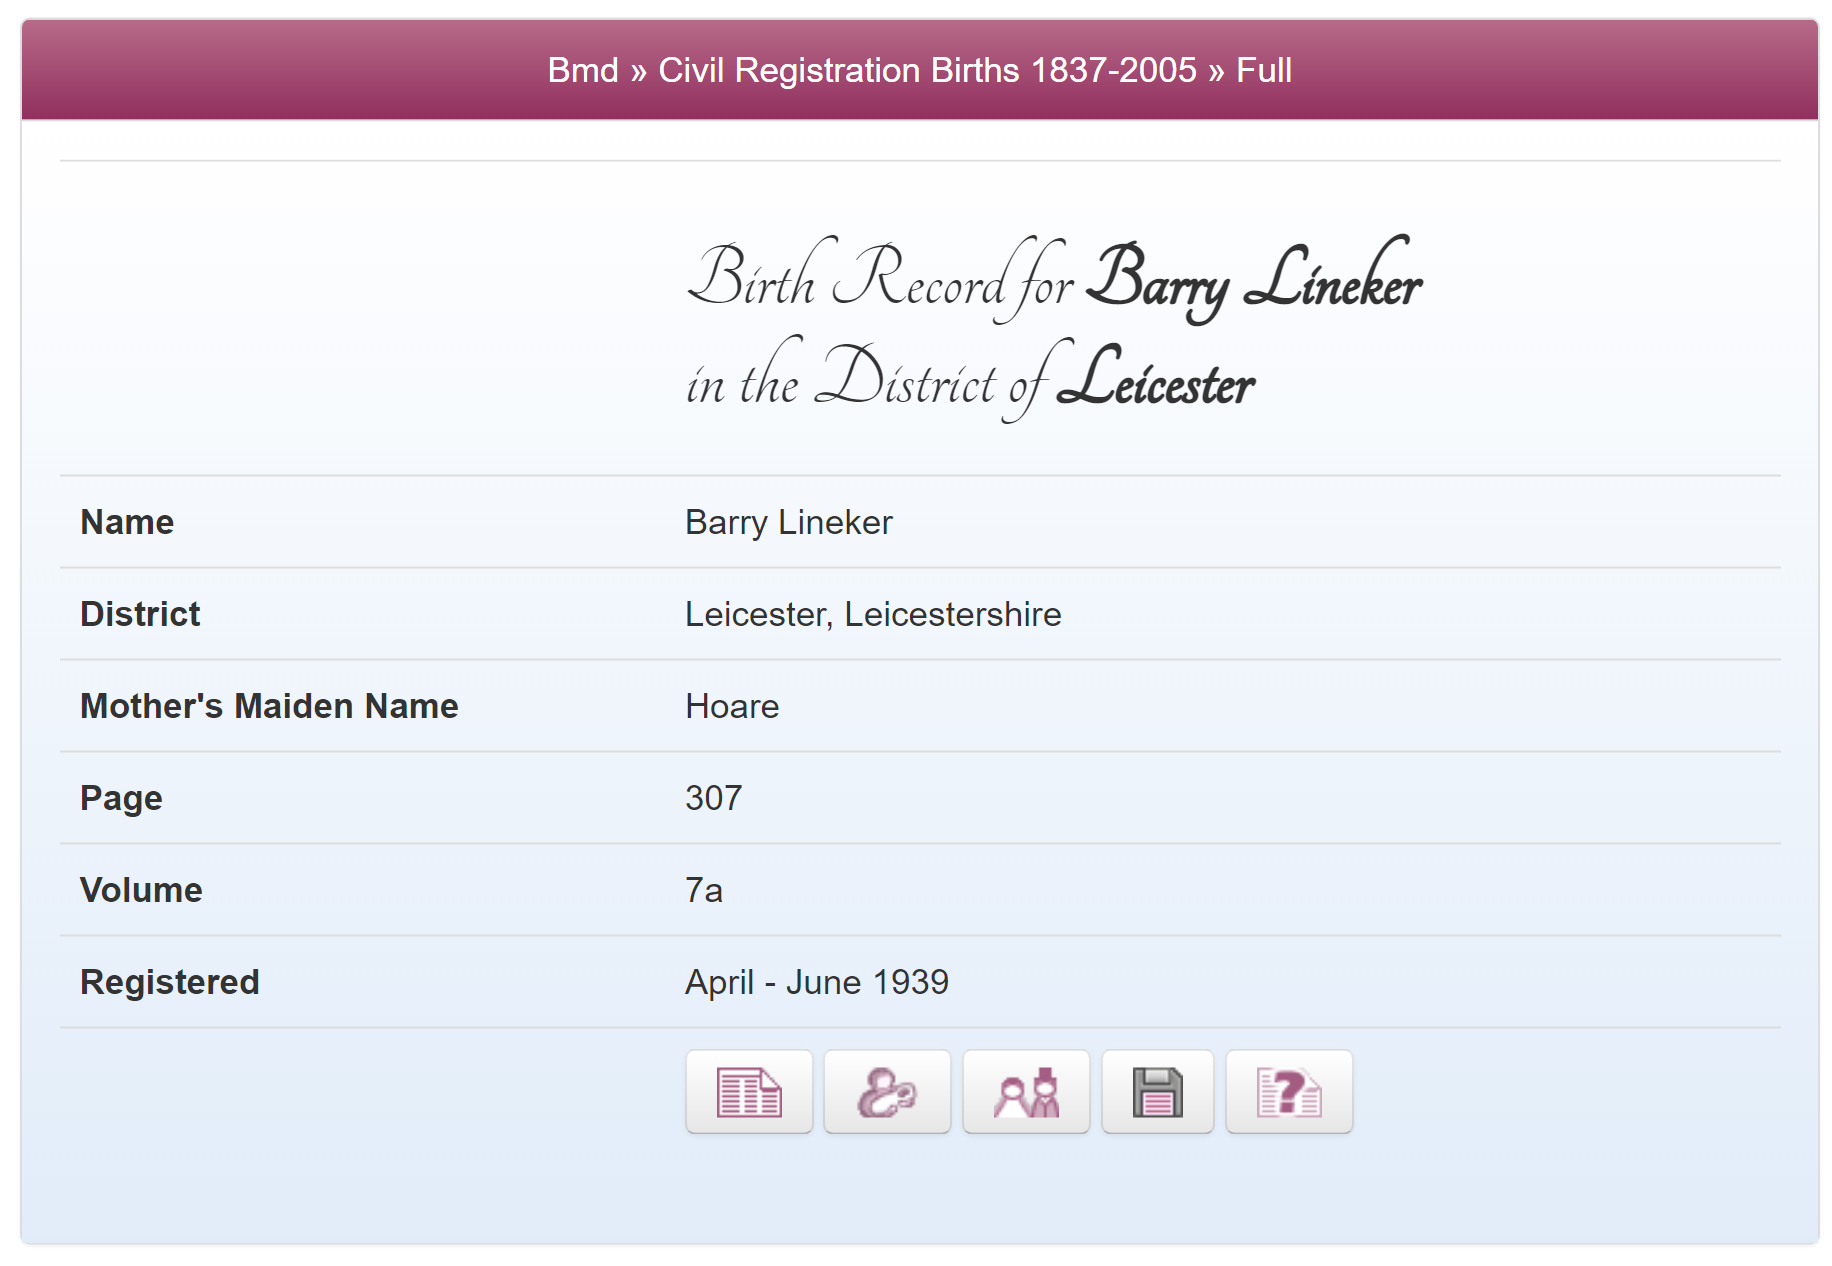 Barry Lineker's Birth Record